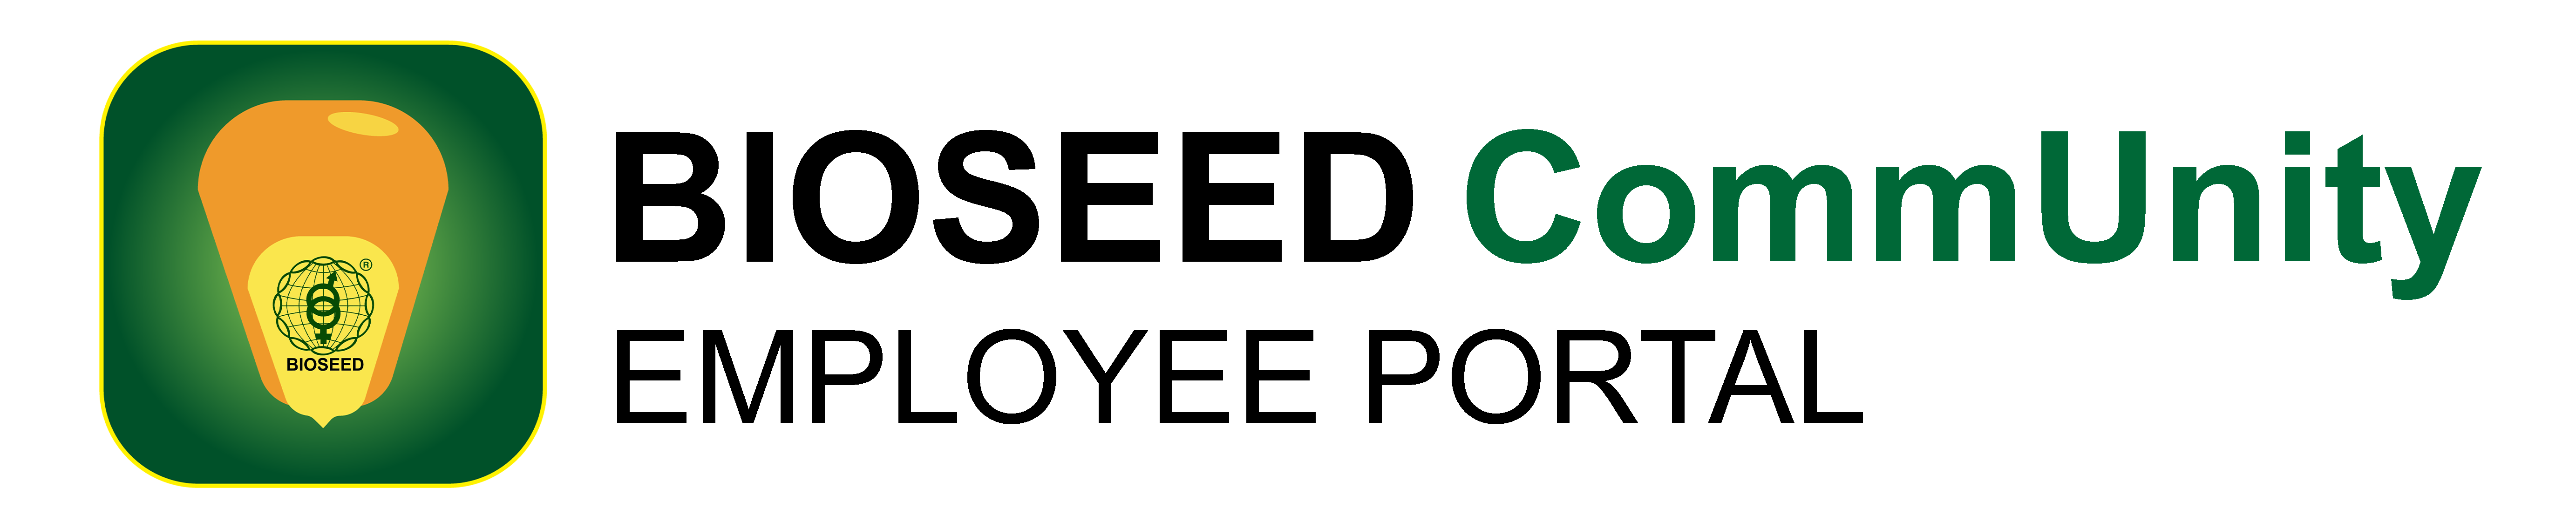 Bioseed Employee Portal Logo with white stoke